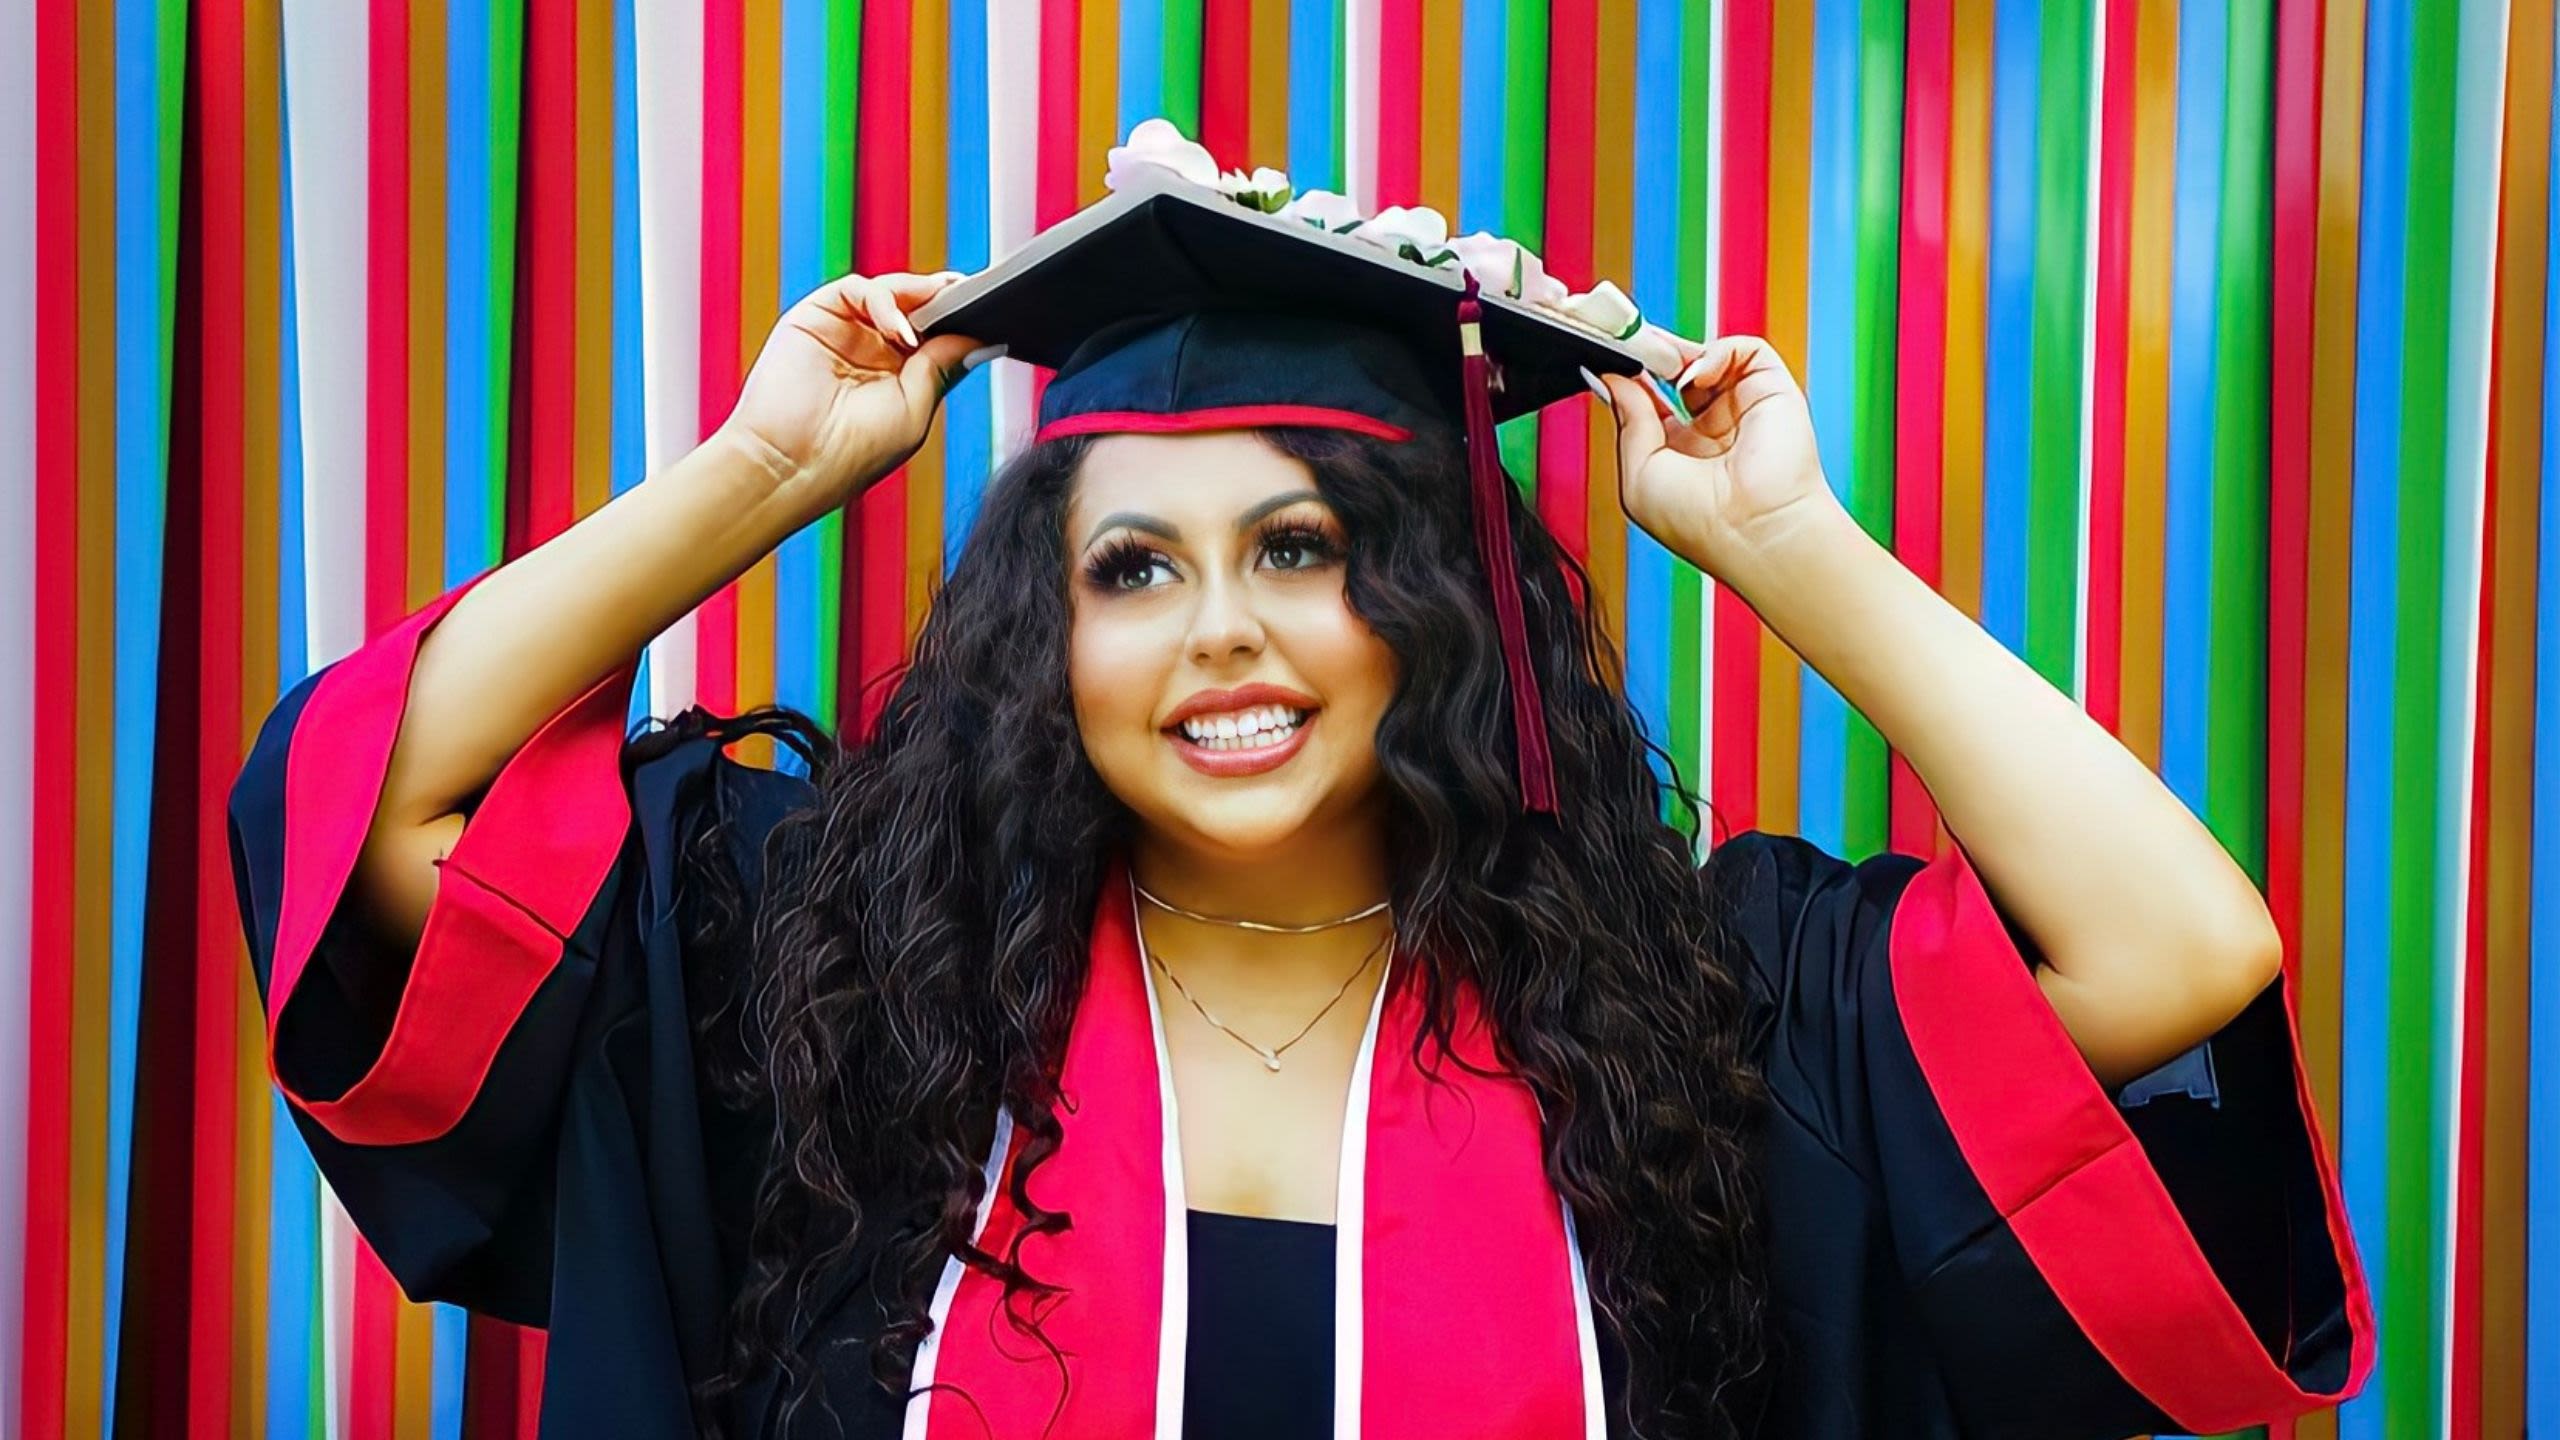 Graduate in regalia smiling in front of striped art wall holding grad cap